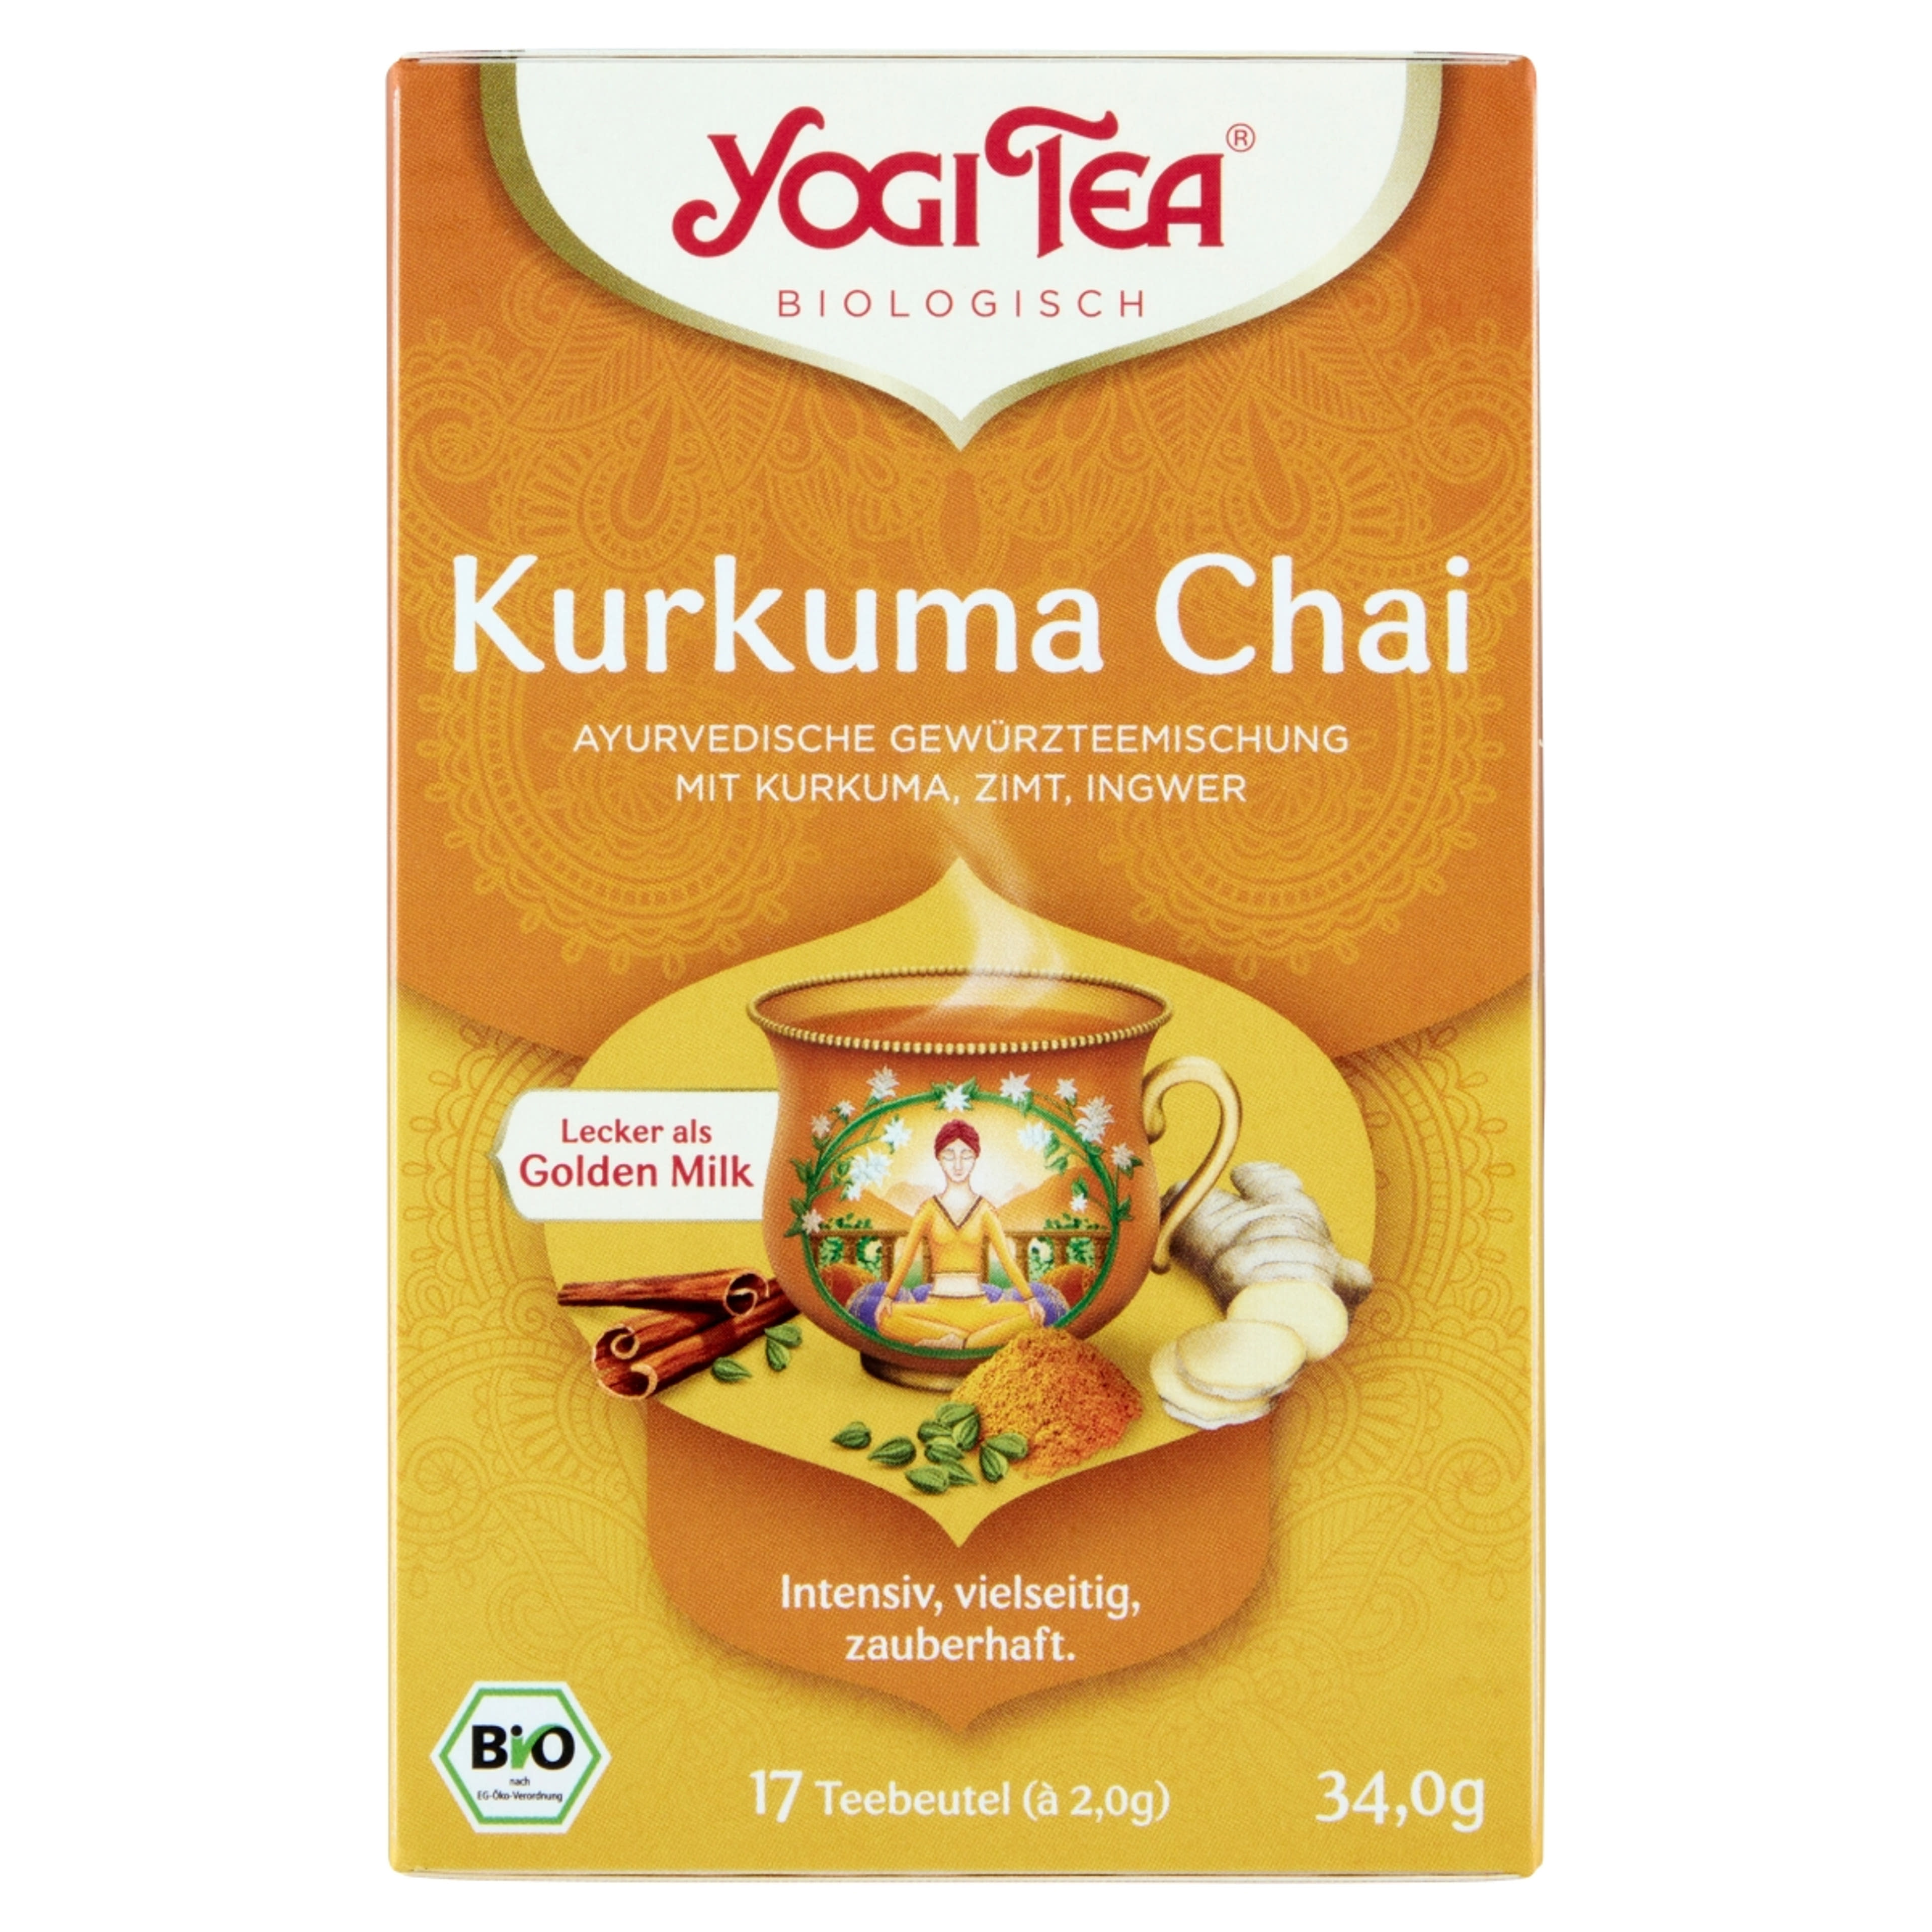 Yogi tea kurkuma chai bio tea - 34 g